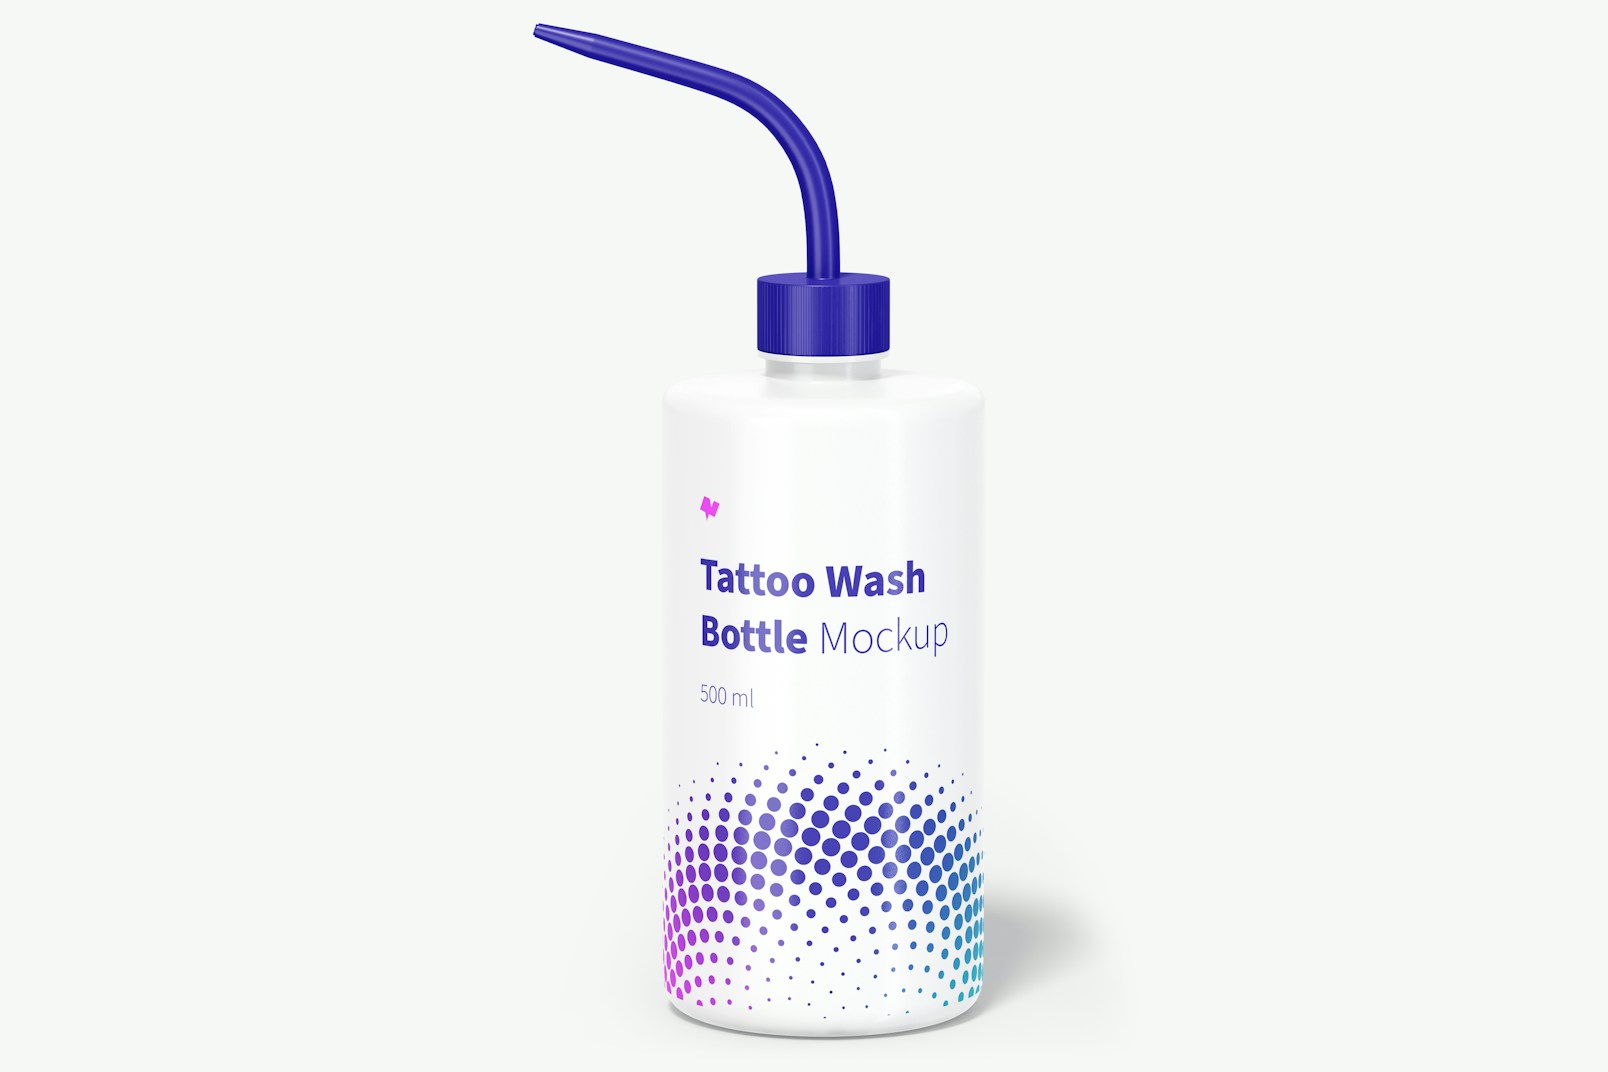 Tattoo Wash Bottle Mockup